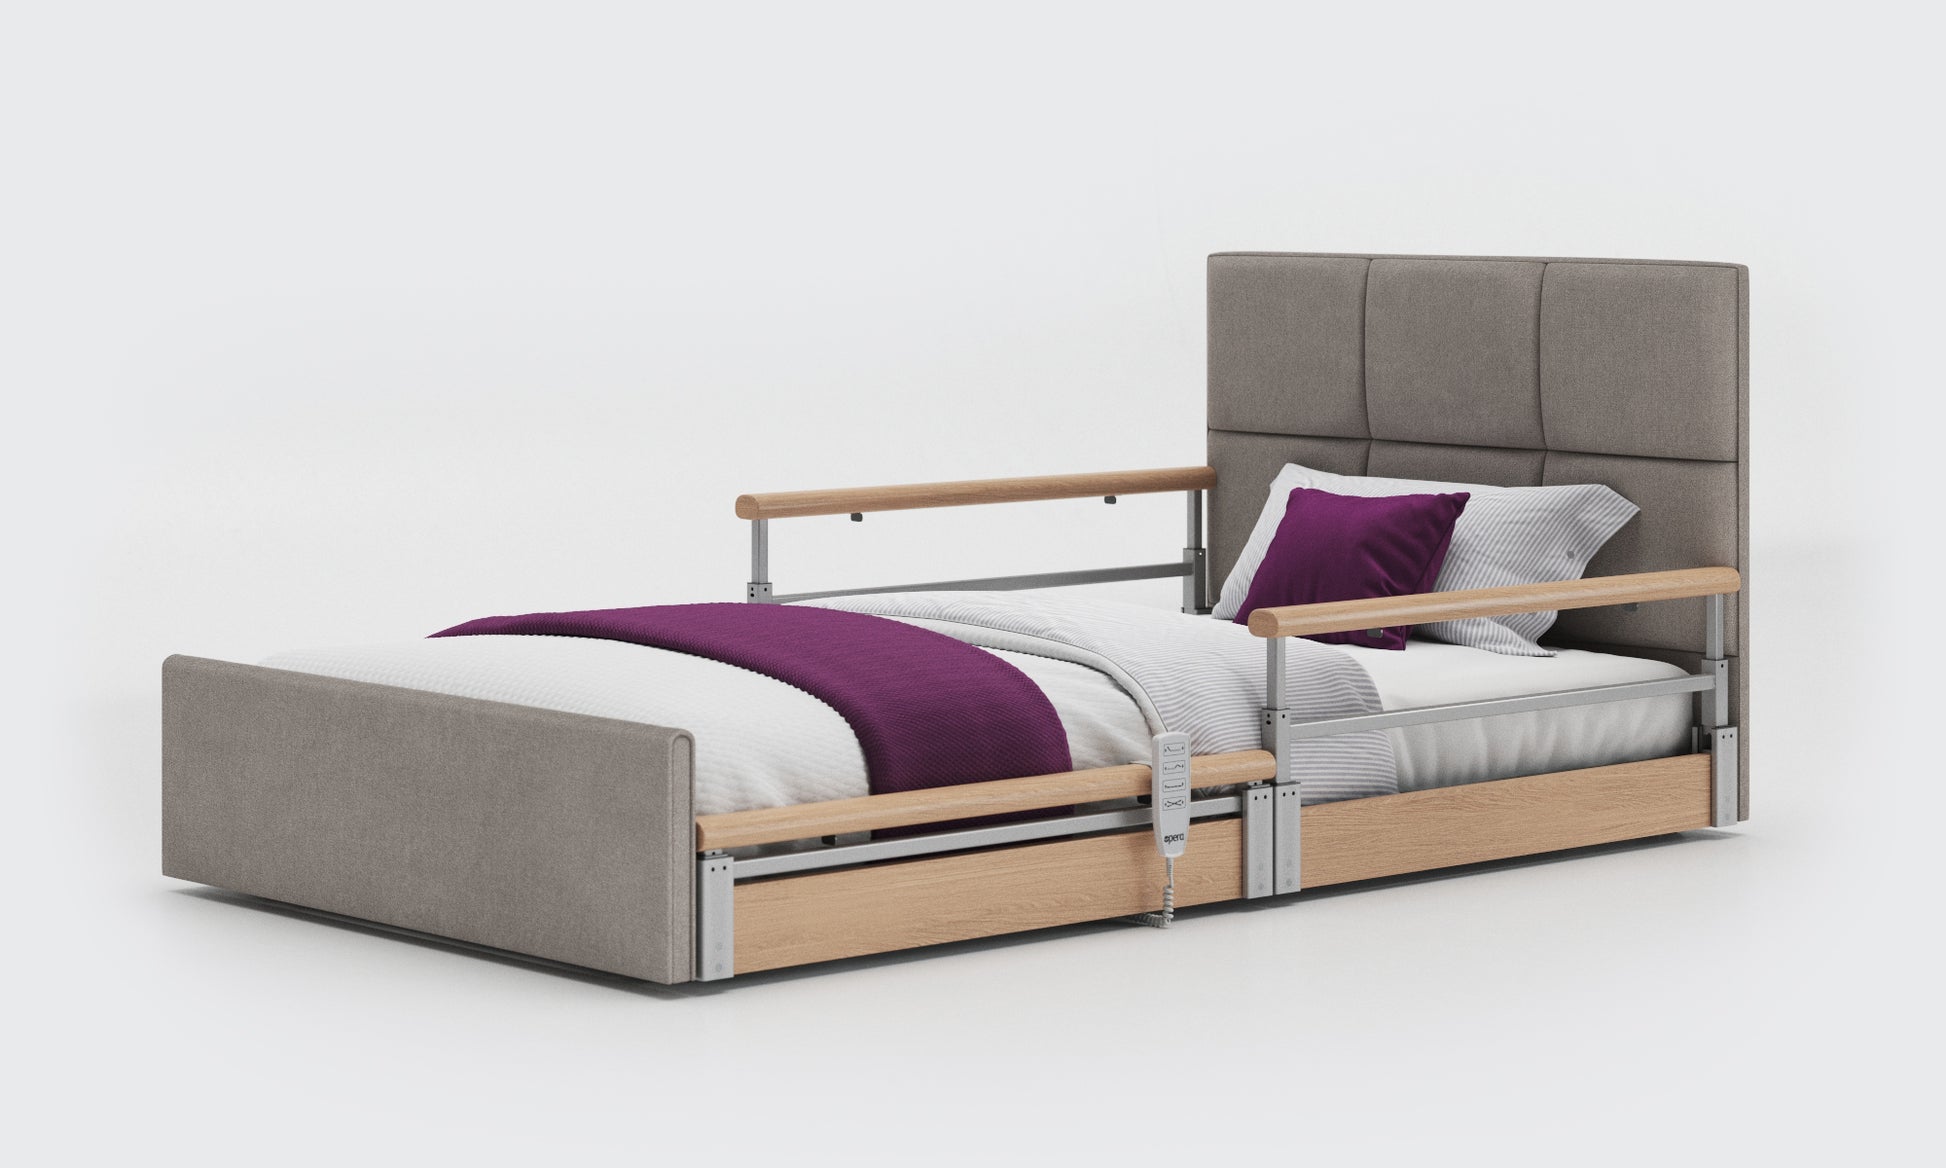 solo comfort plus bed in 3ft6 with oak split rails with opal headboard in zinc fabric